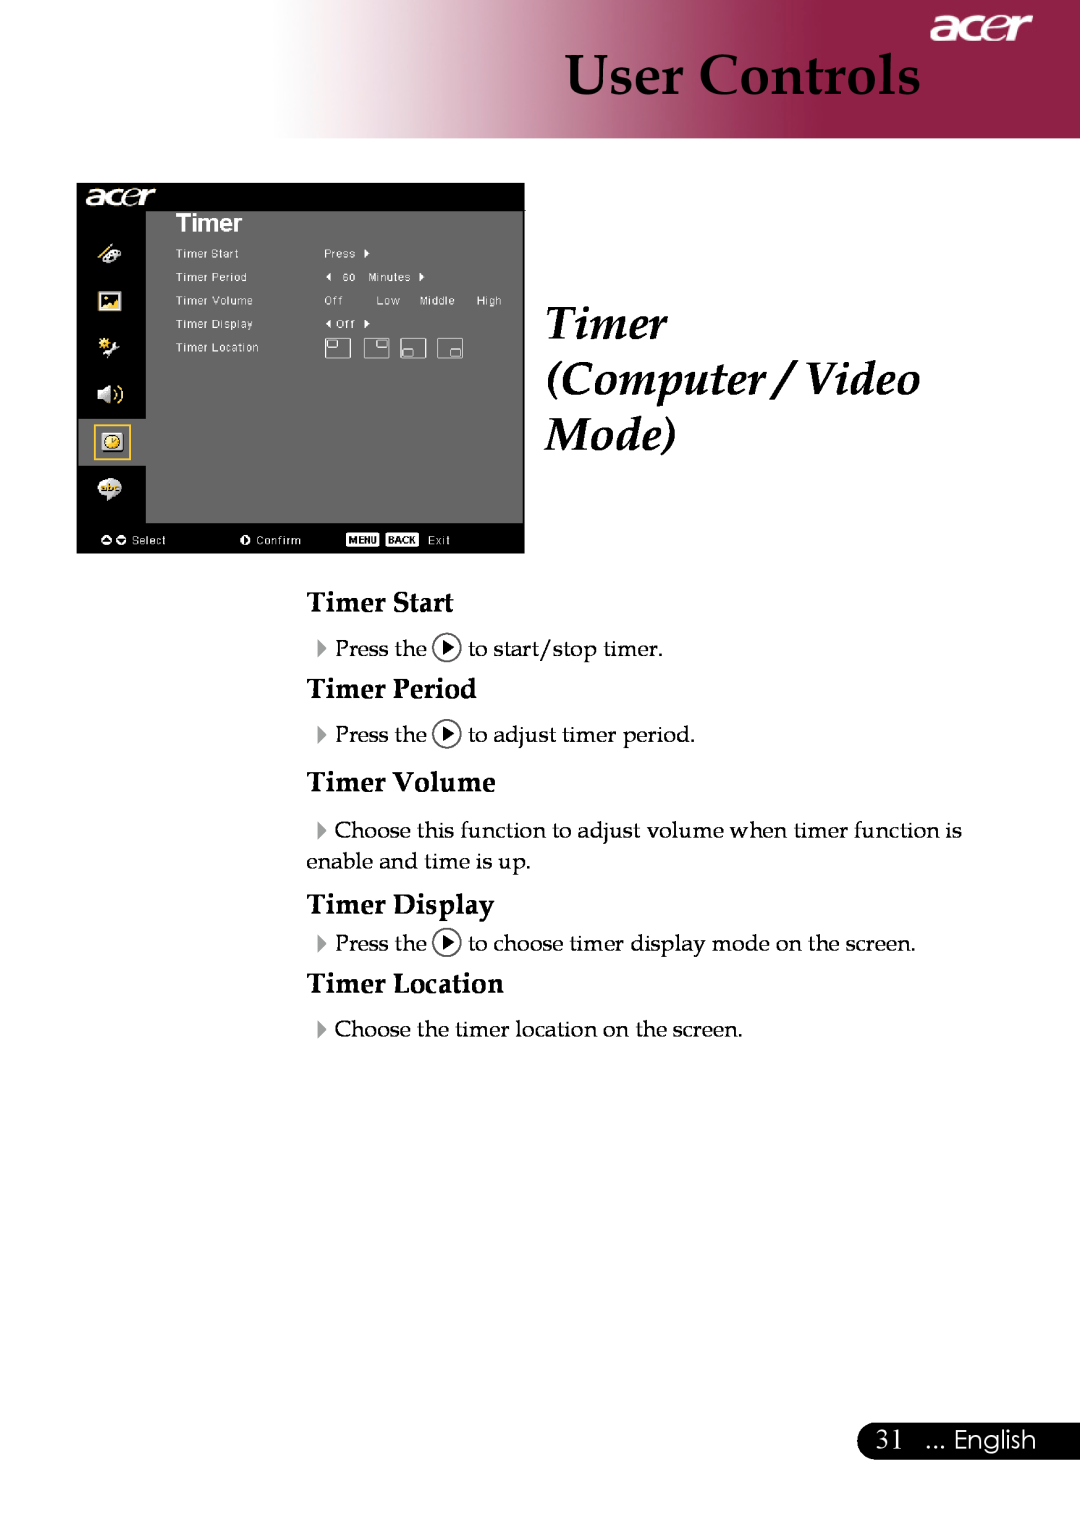 Acer XD1280 Timer Computer / Video Mode, Timer Start, Timer Period, Timer Volume, Timer Display, Timer Location, English 